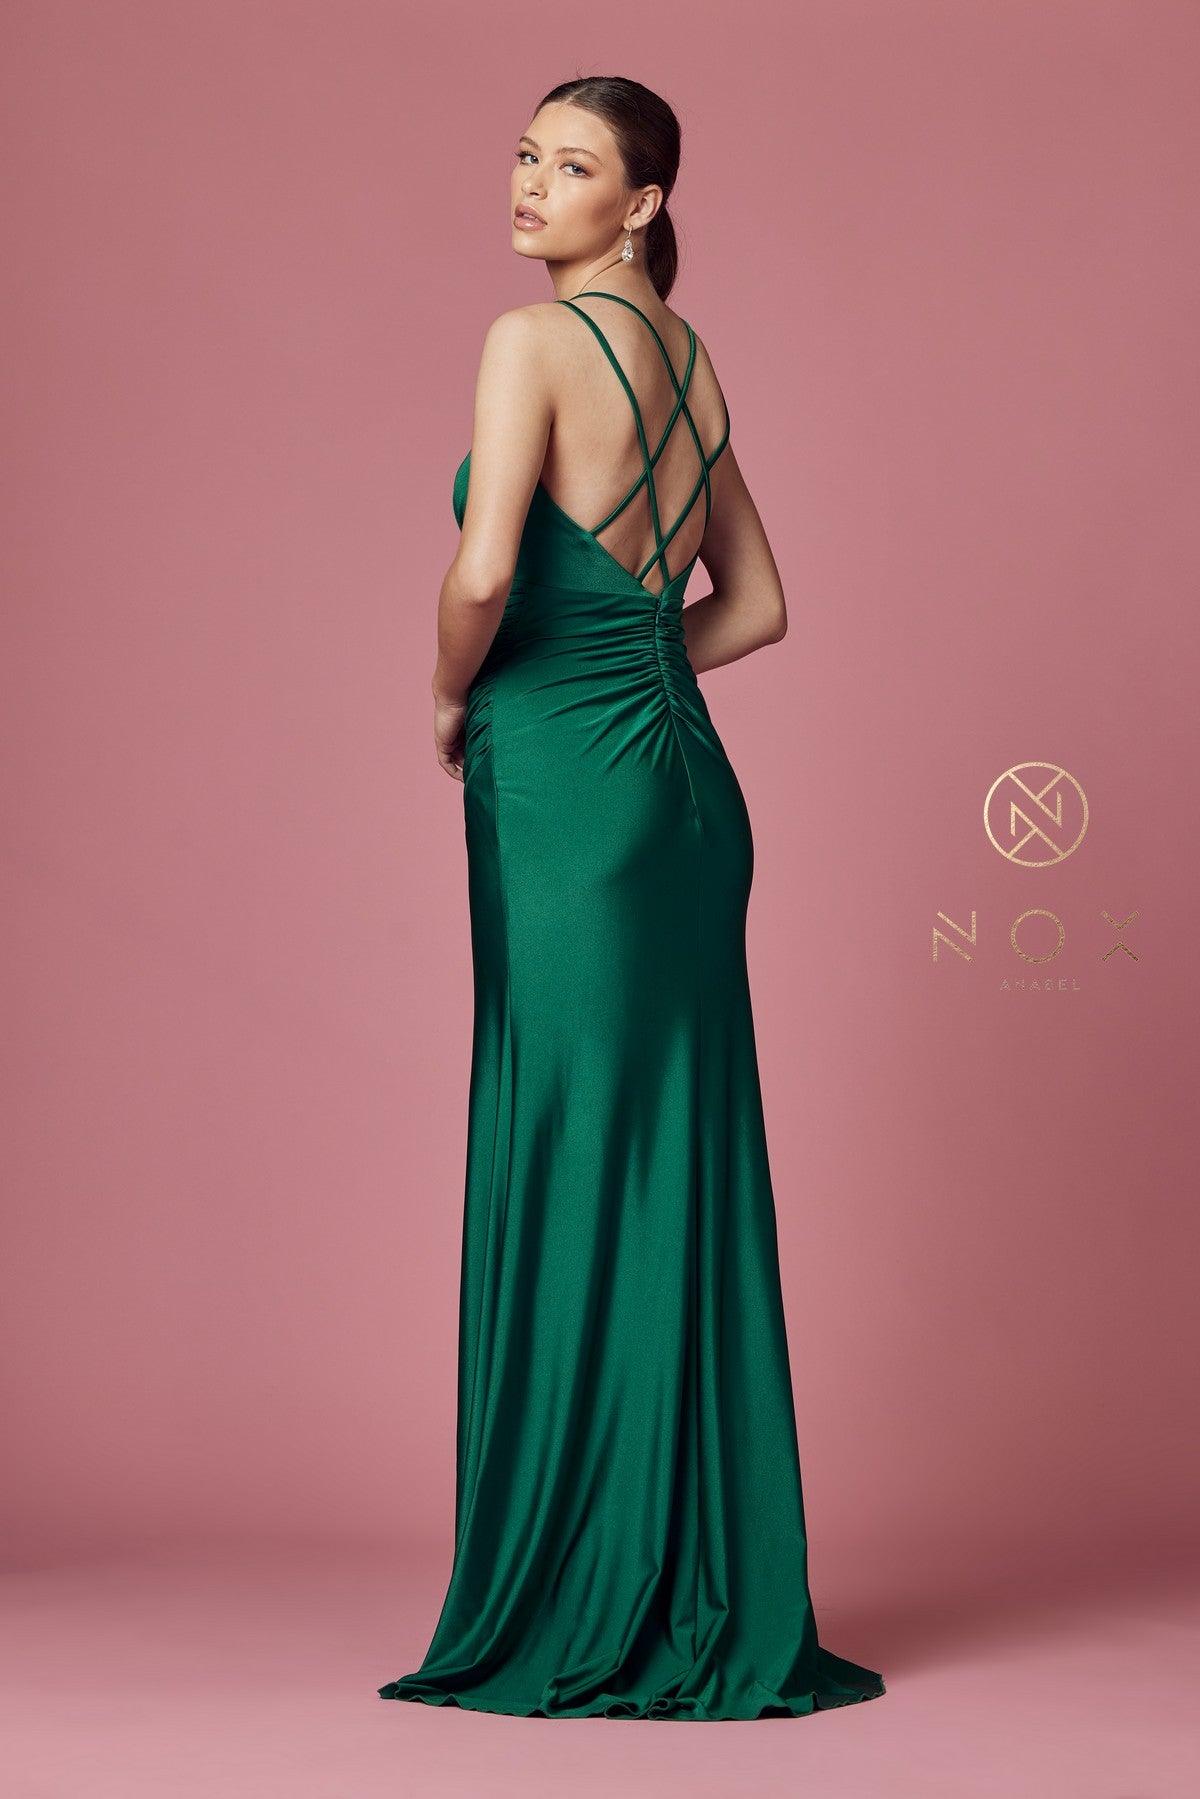 Formal Dress: 27490. Long Fitted Dress, Off The Shoulder, Fit N Flare |  Alyce Paris